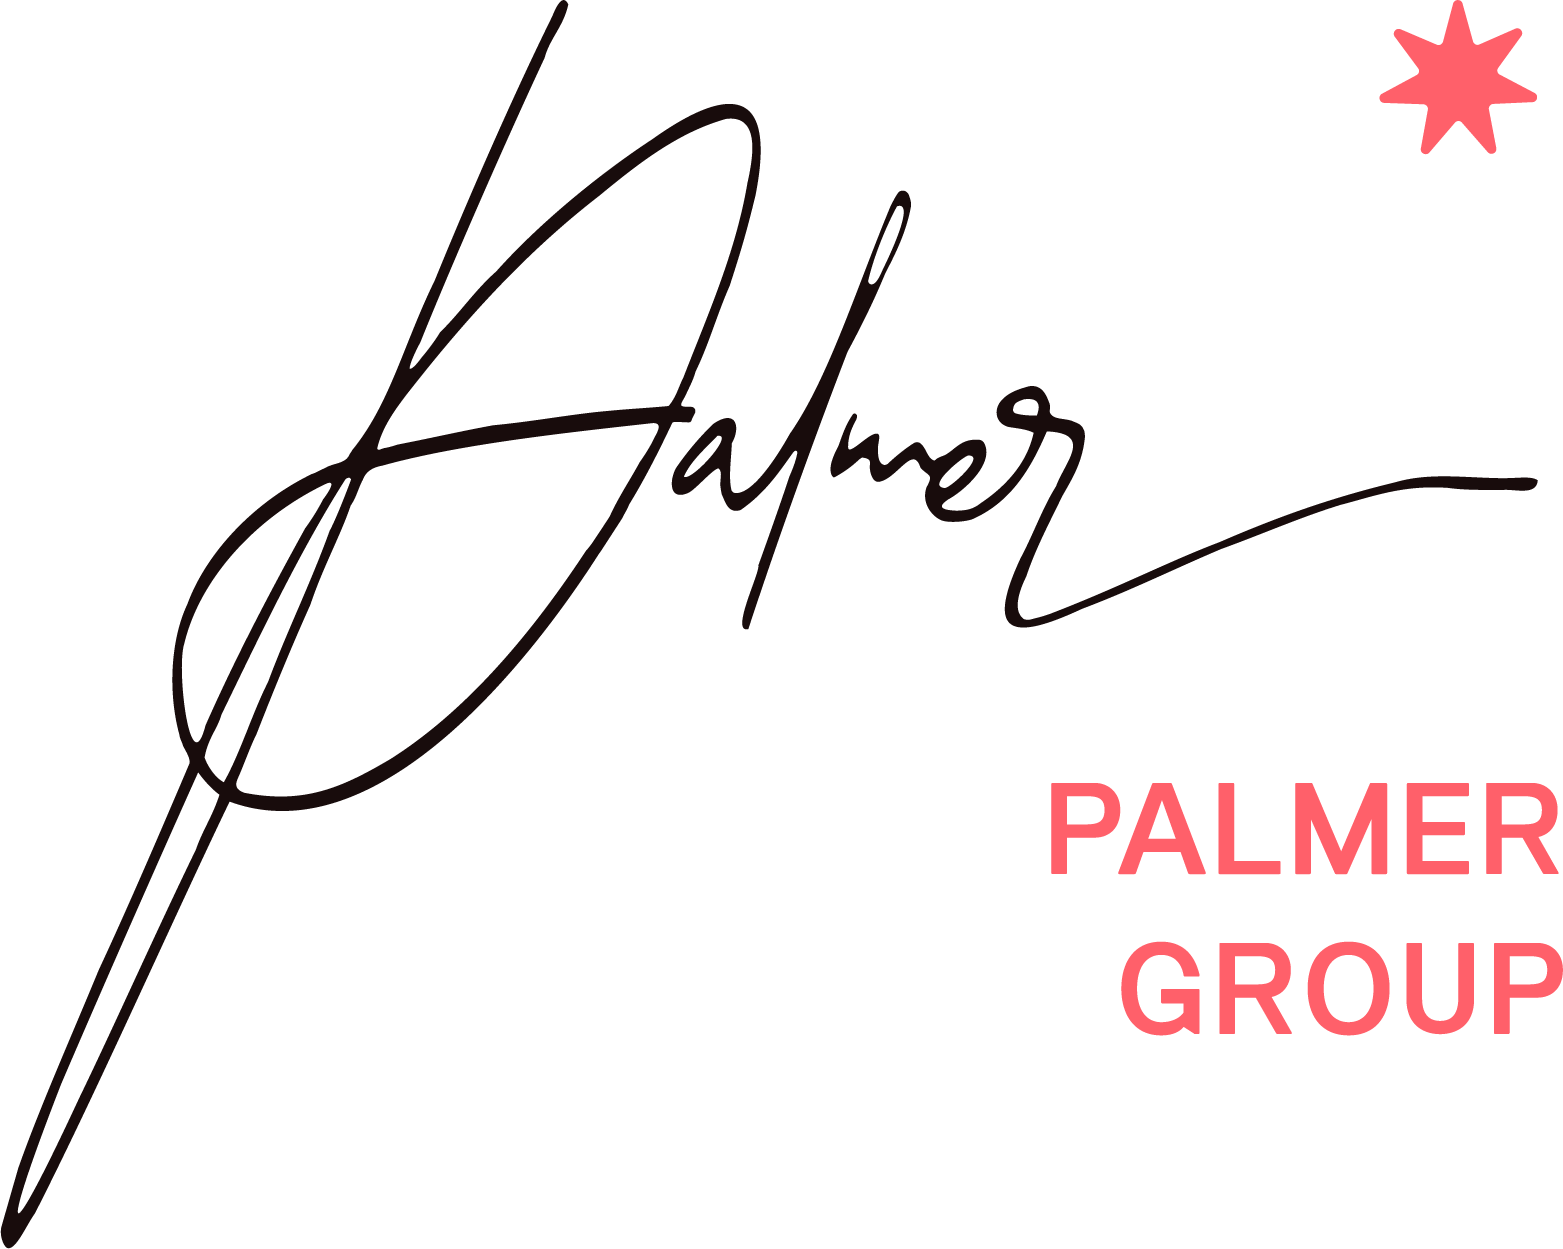 Palmer Group logo svart transparent bakgrunn uten luft.png